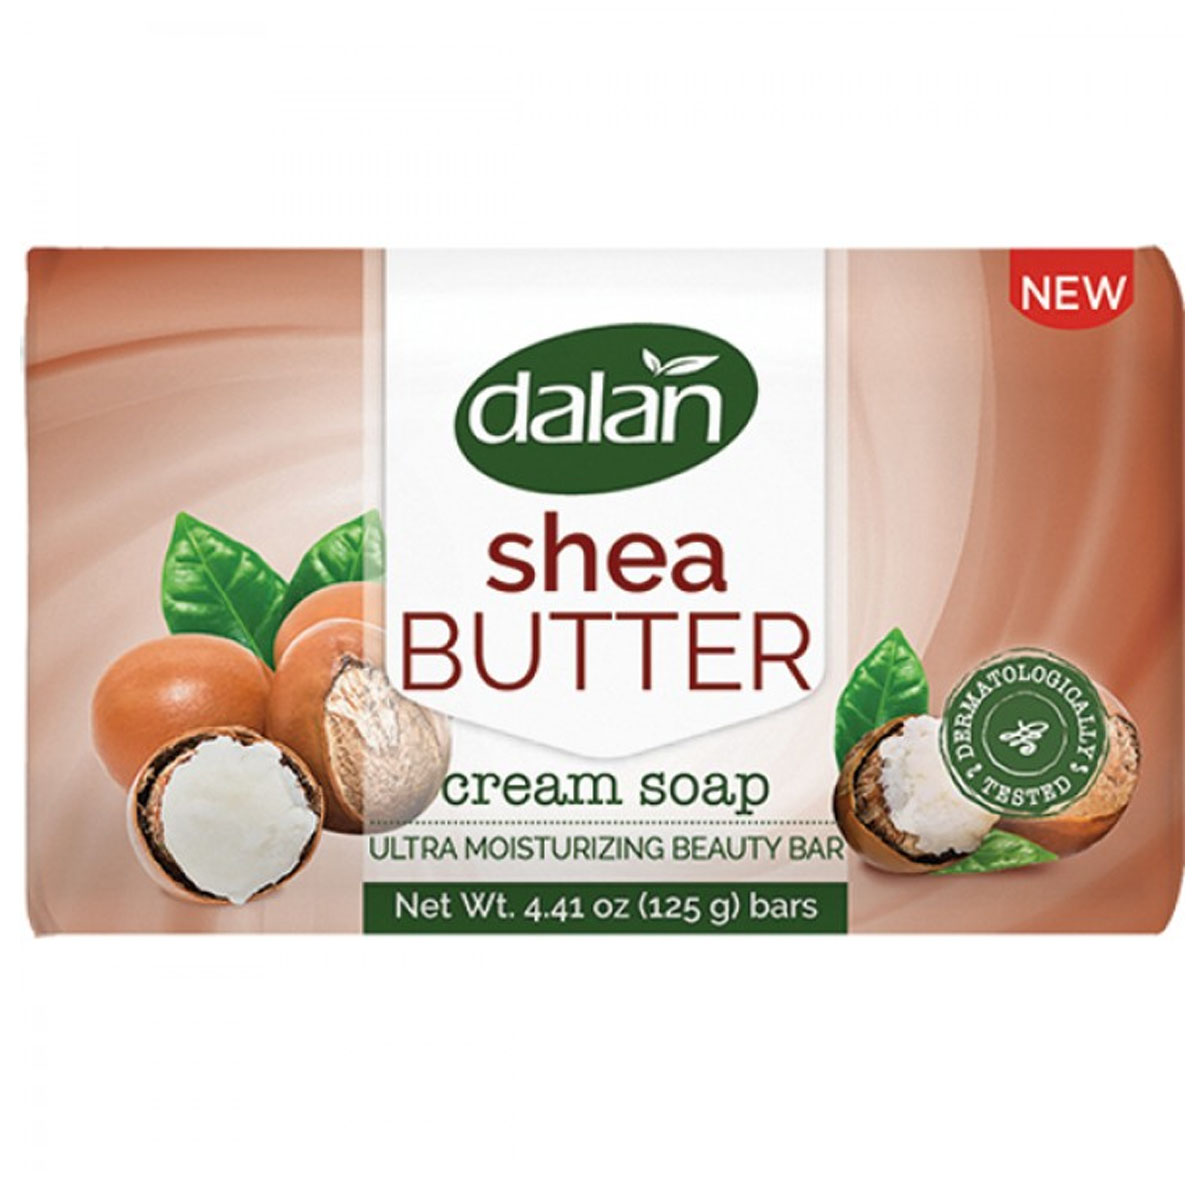 DALAN Shea Butter Cream Soap 125g